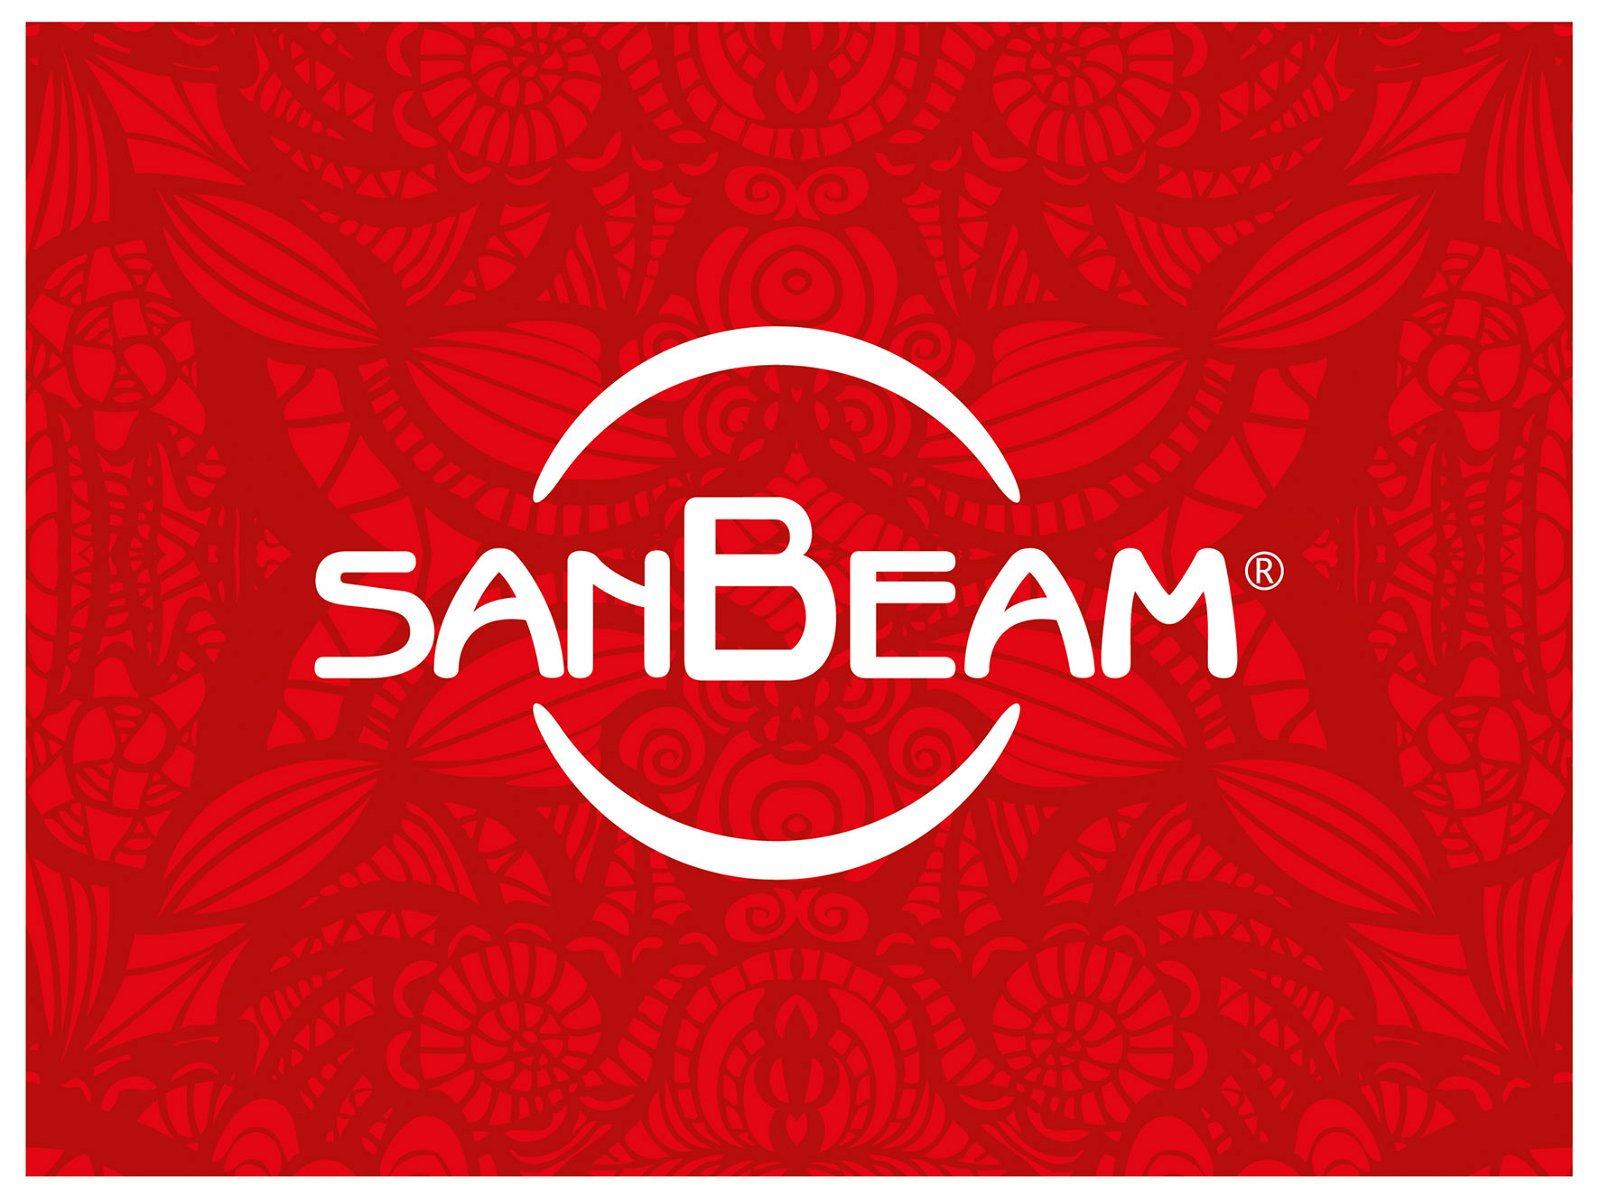 Sanbeam